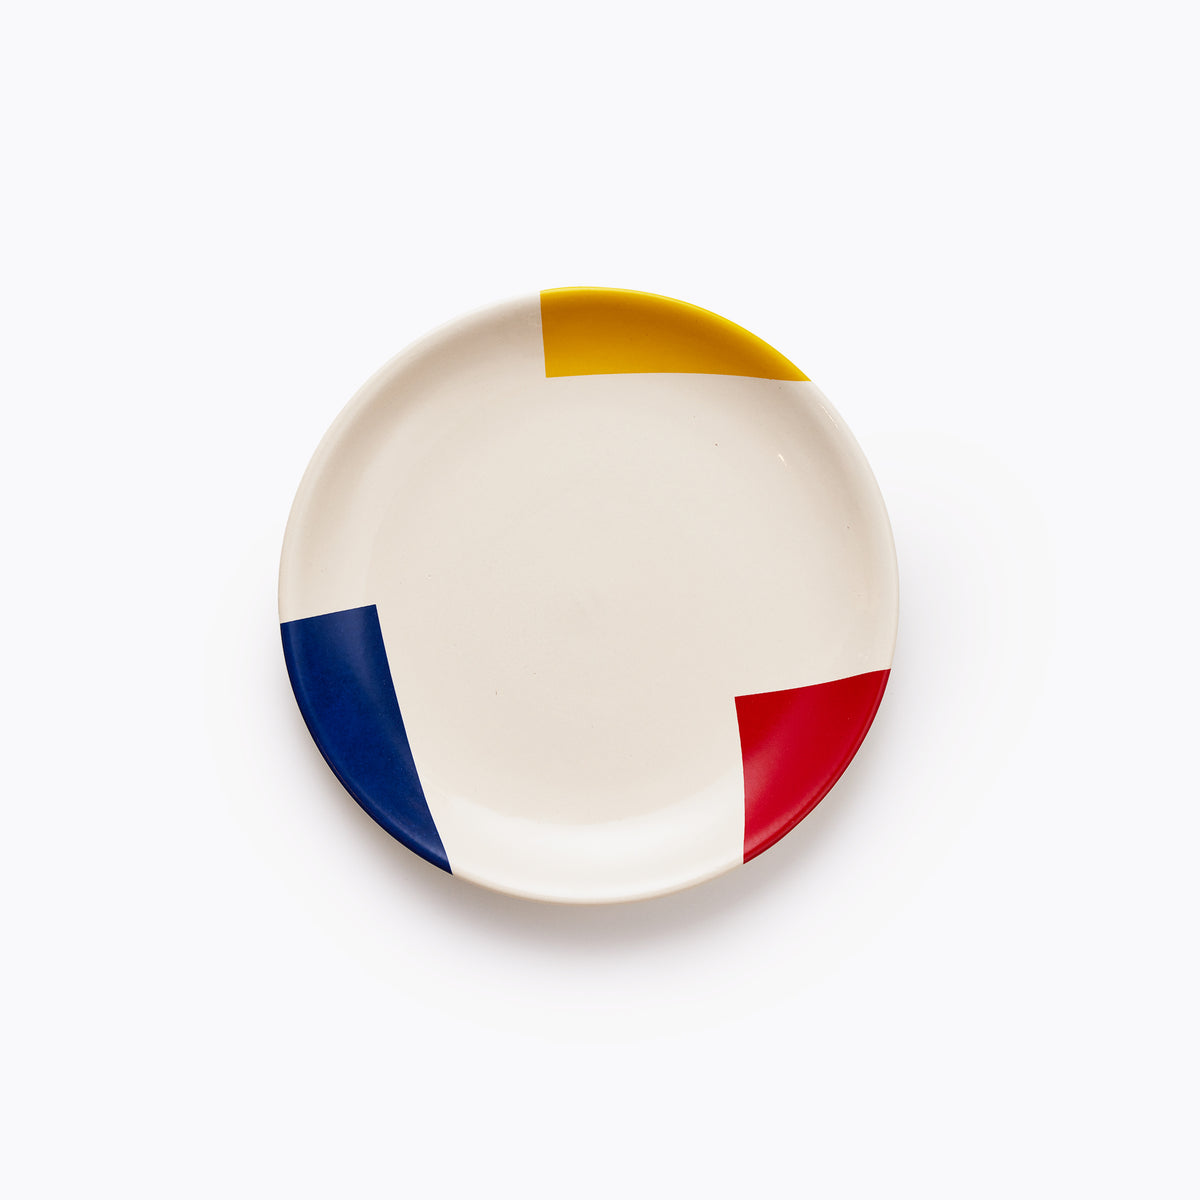 Bauhaus Dinner Plates - Set of 2